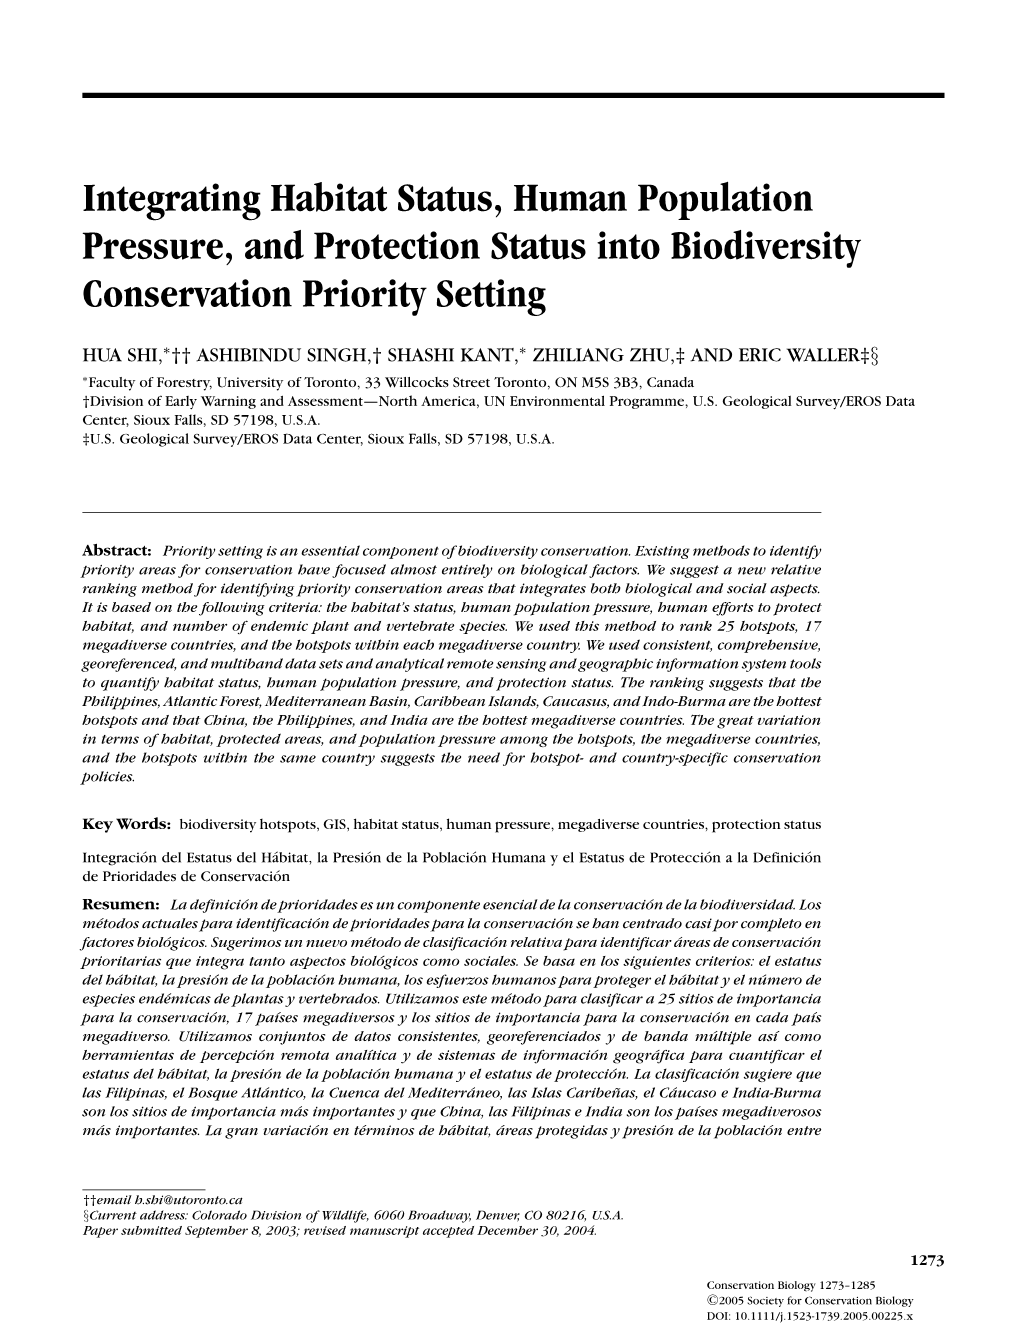 Integrating Habitat Status, Human Population Pressure, and Protection Status Into Biodiversity Conservation Priority Setting